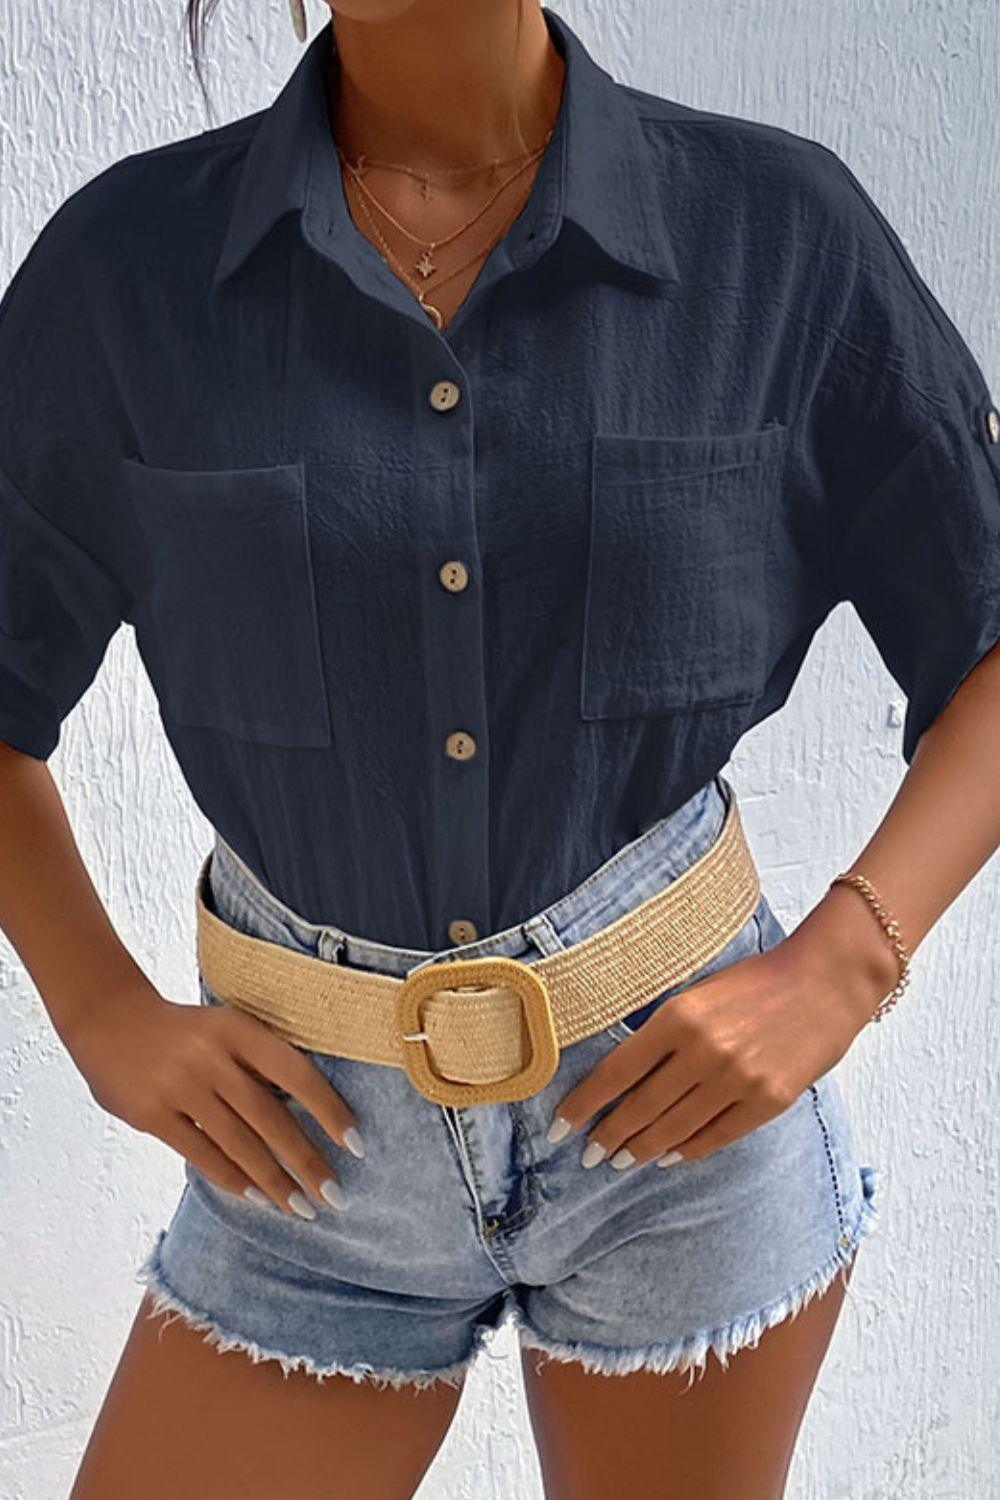 Roll-Tab Sleeve Shirt with Pockets - SteelBlue